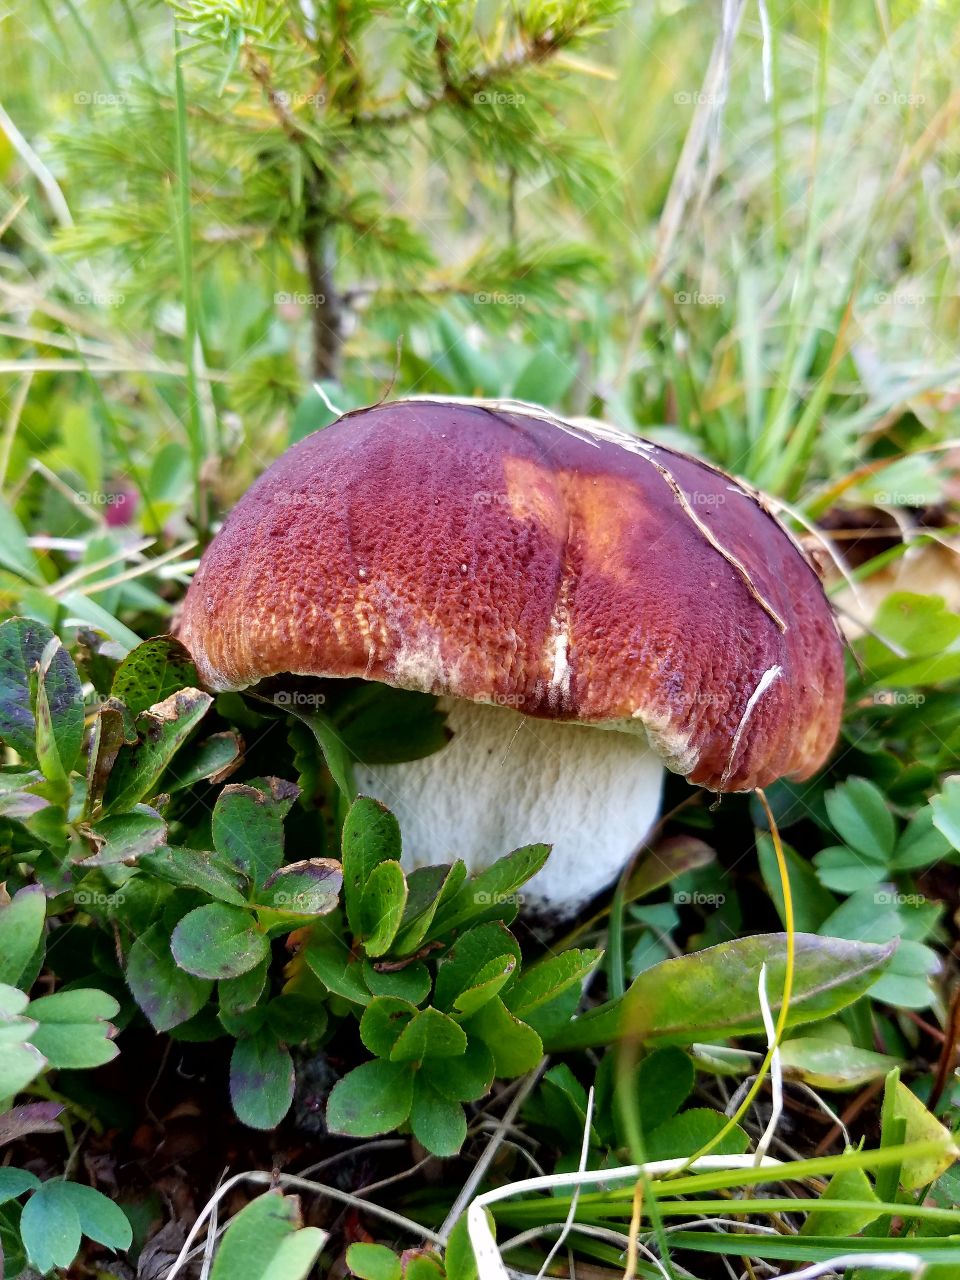 wilde mushrooms